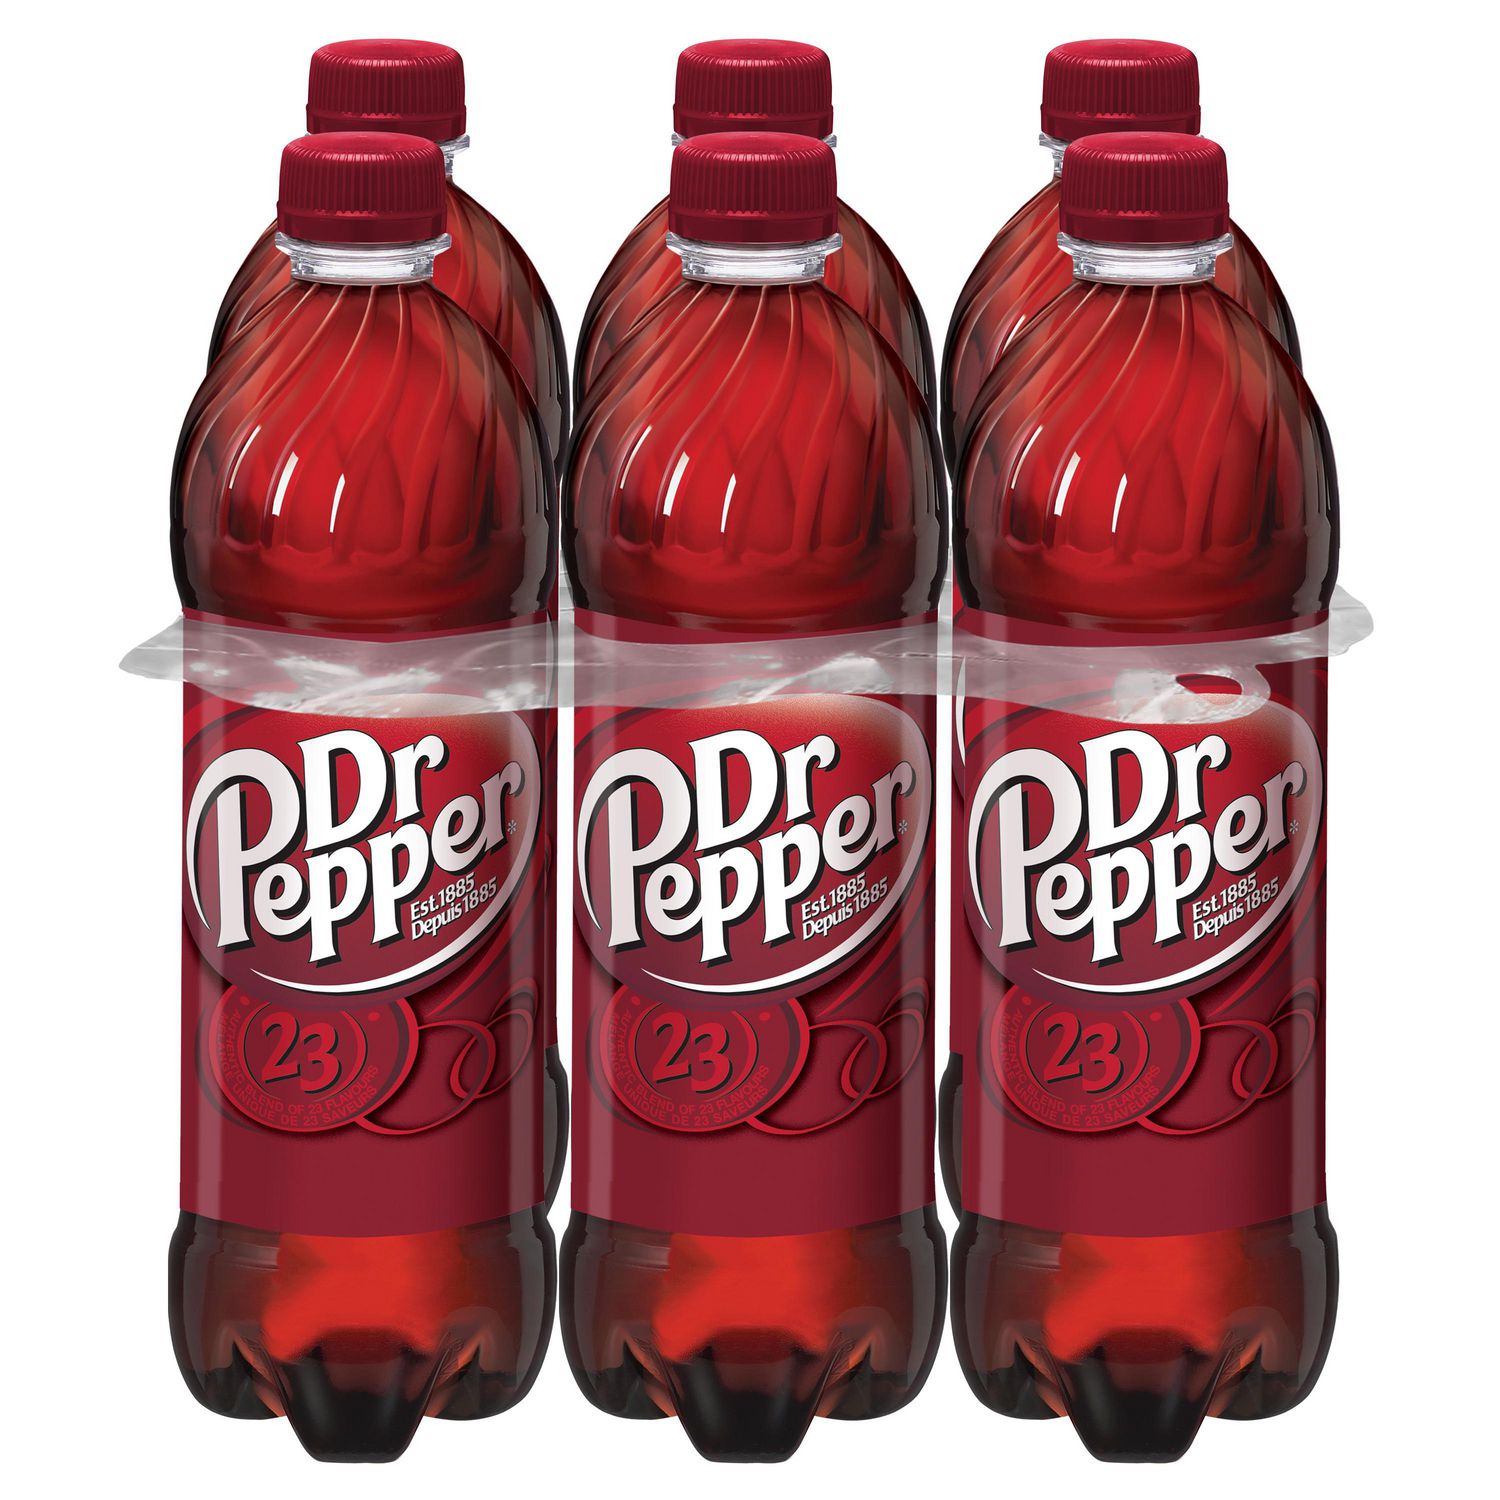 Pepper напиток. Мистер Пеппер напиток. Dr Pepper Польша. Красный доктор Пеппер. Доктор Пеппер (Рэд Фьюжн).